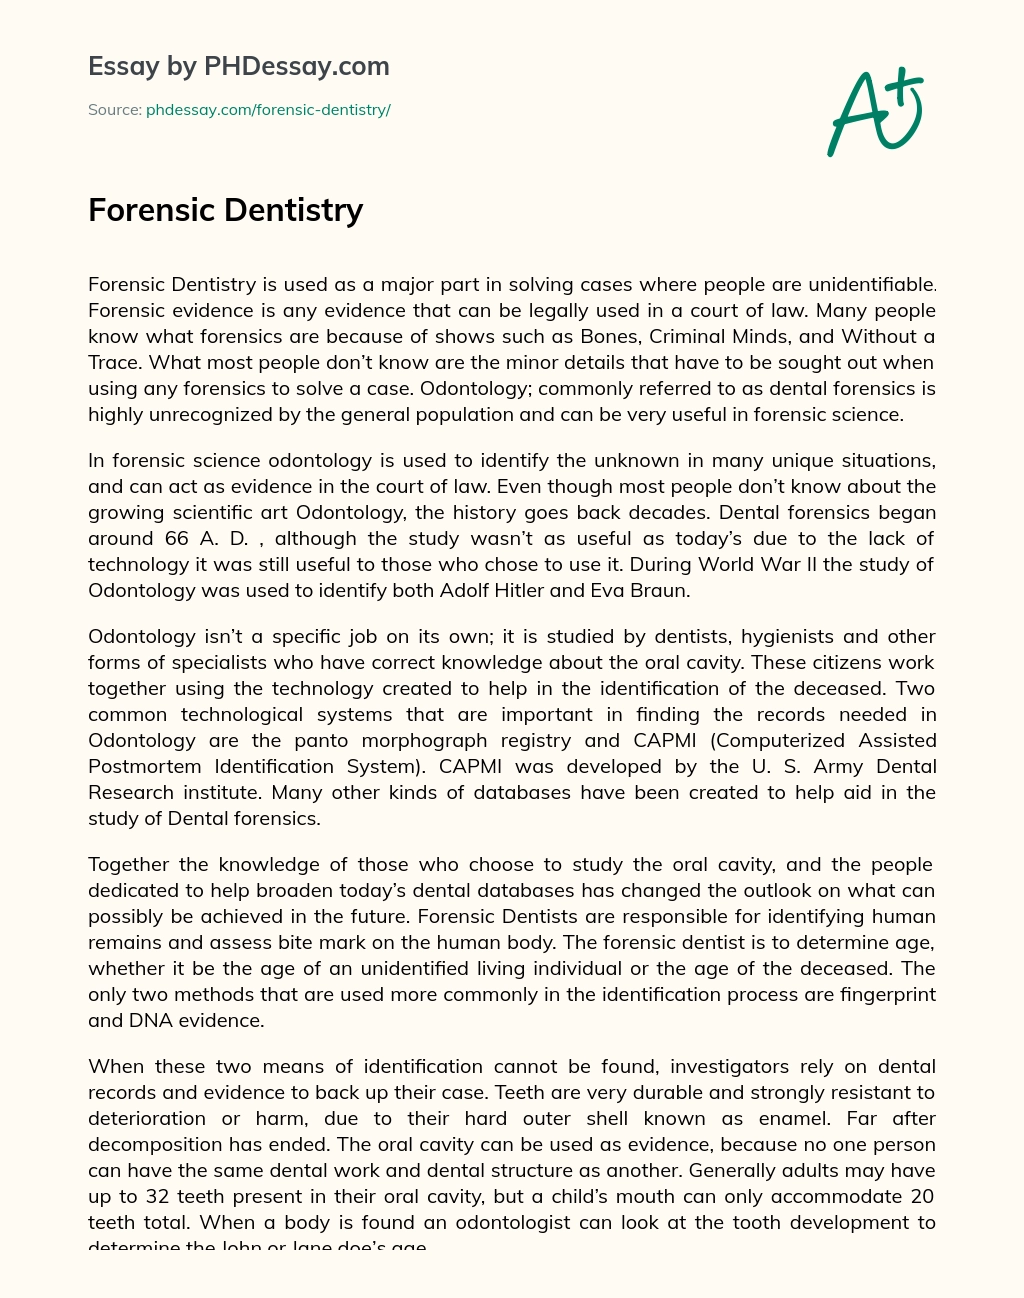 Forensic Dentistry essay